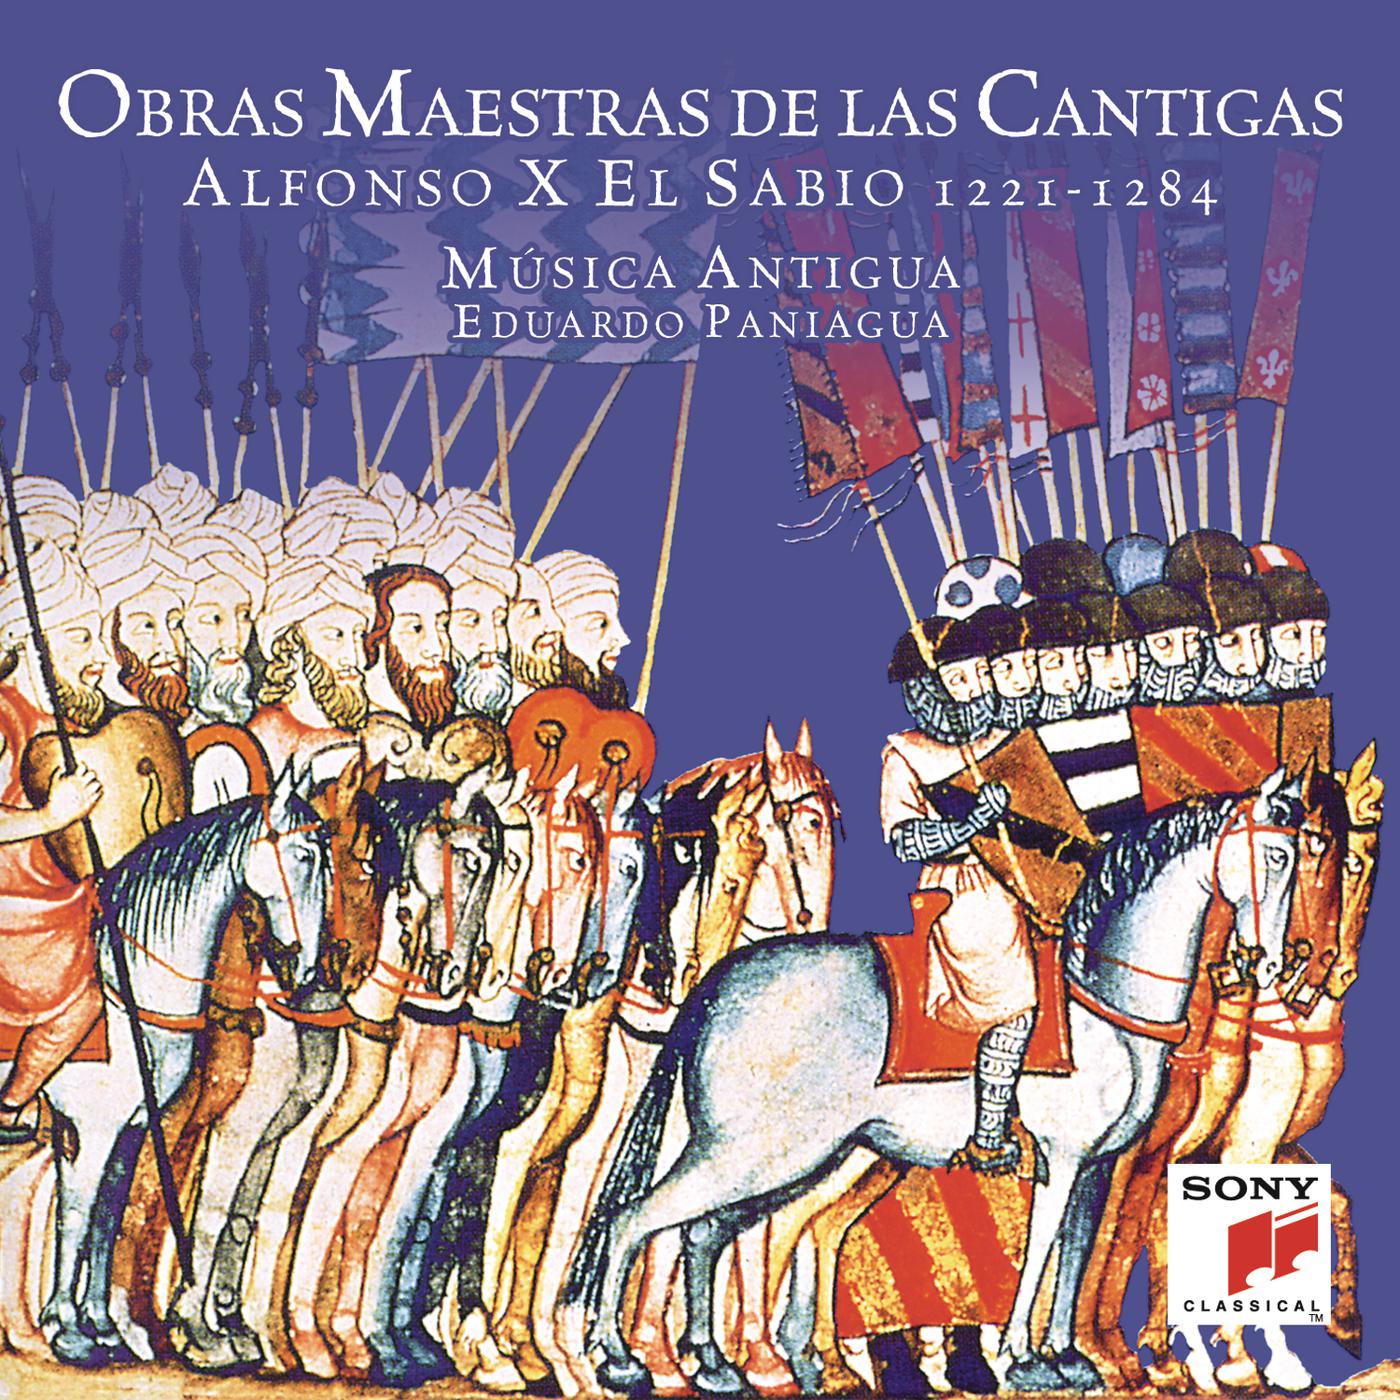 Grupo De Musica Antigua De Eduardo Paniagua - CSM-180 Vieja Y Niña (Vella E Ninya)